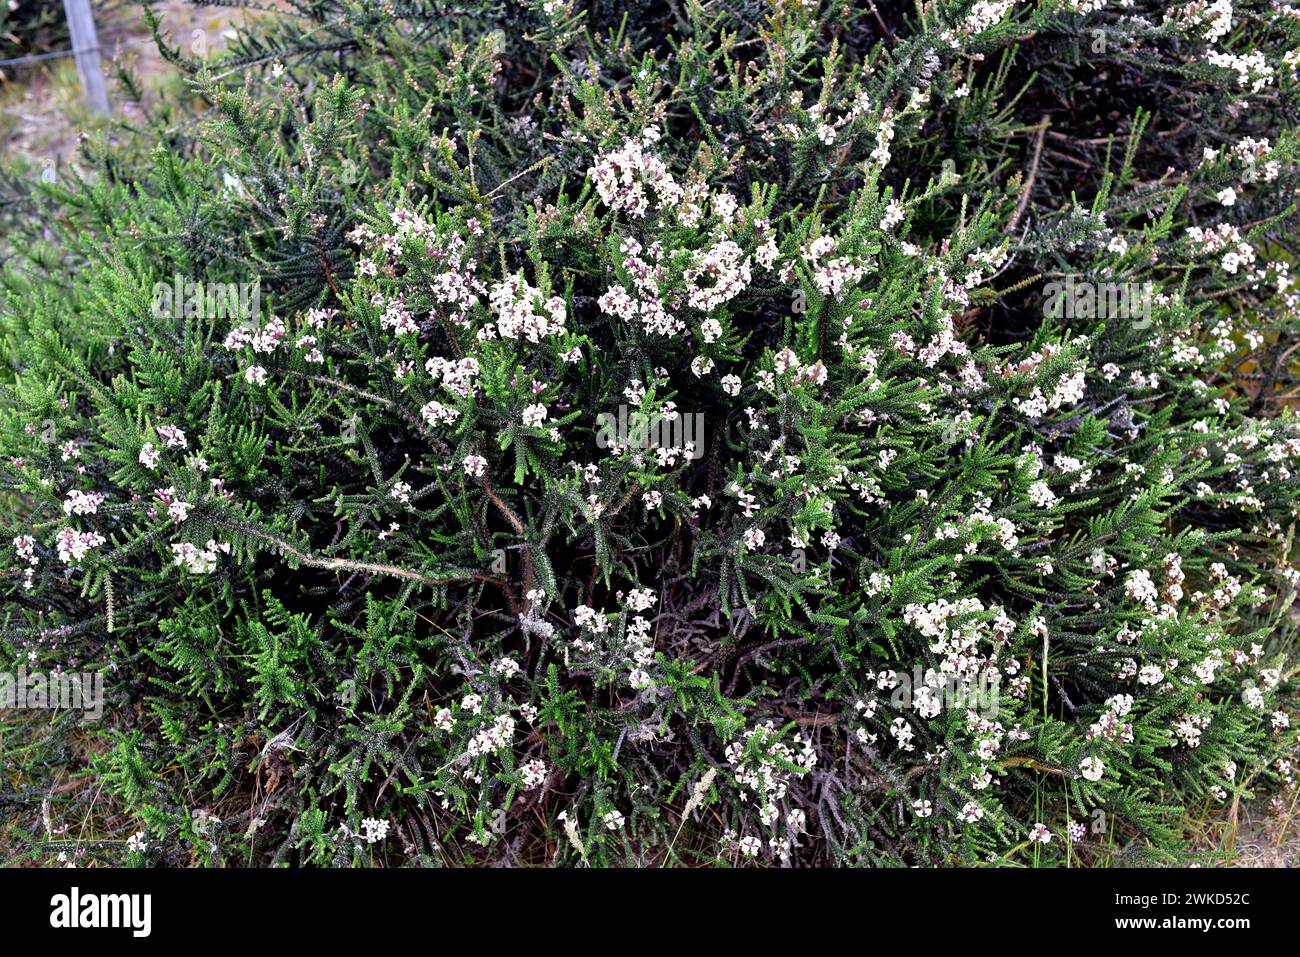 Black bush or mata negra (Mulguraea tridens or Junellia tridens) is a shrub native to Magallanes Region (Argentina and Chile). This photo was taken in Stock Photo